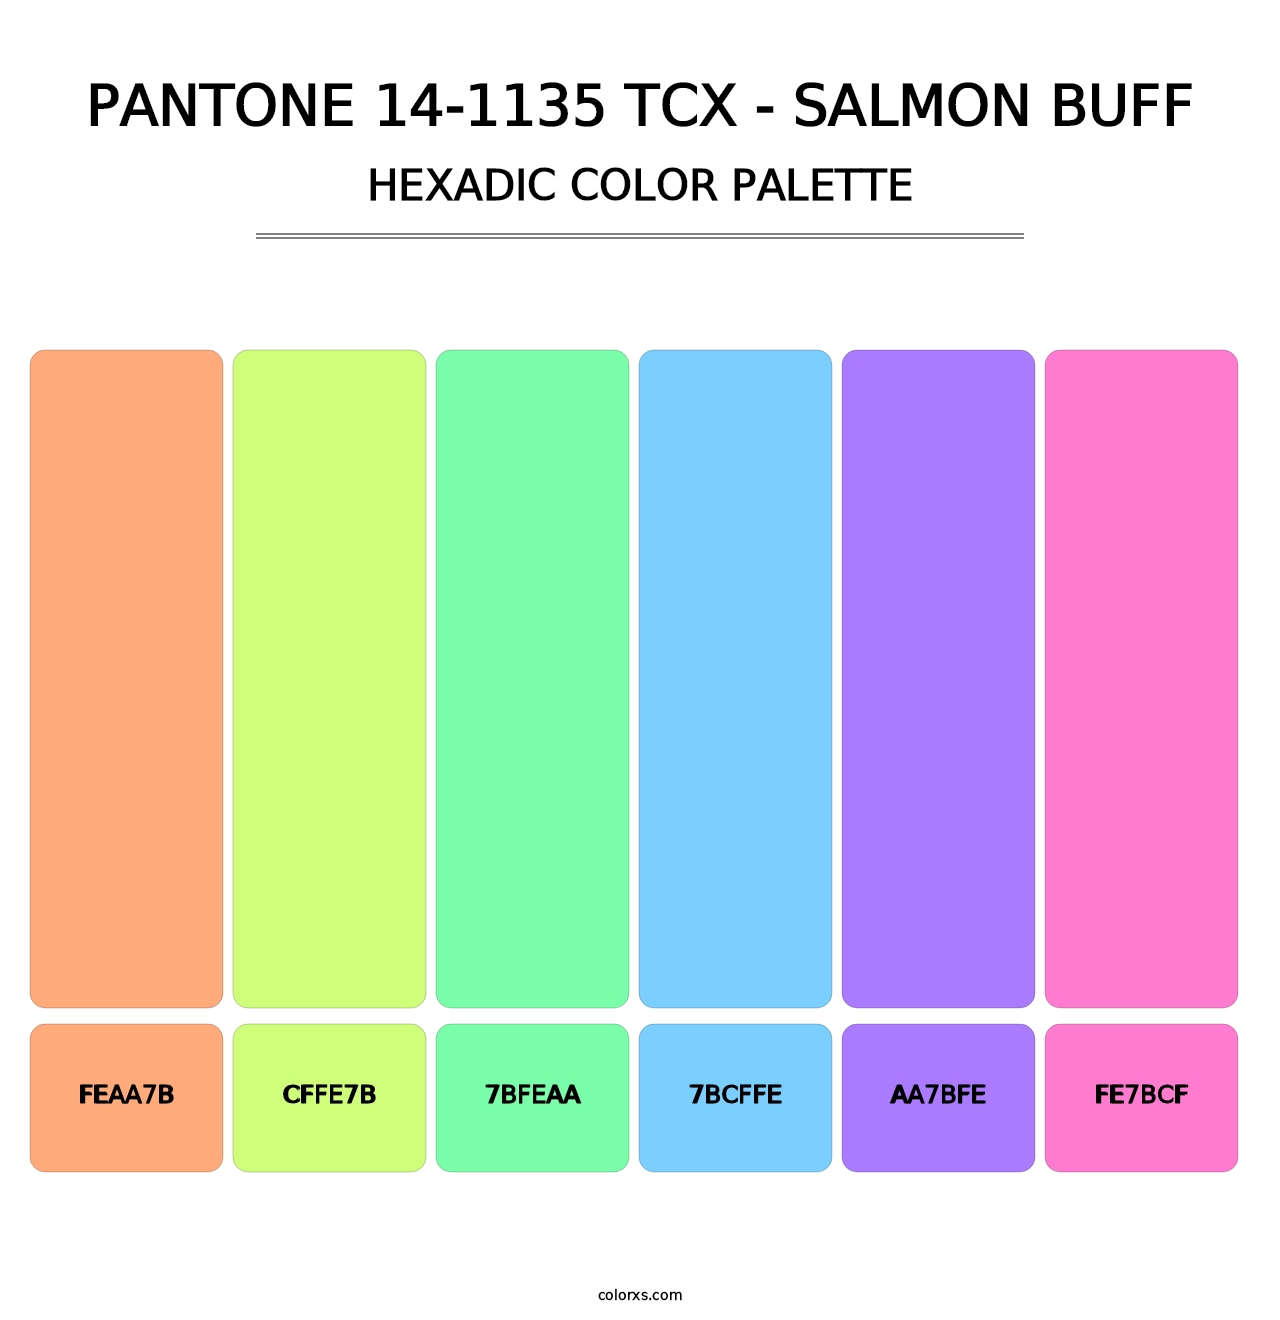 PANTONE 14-1135 TCX - Salmon Buff - Hexadic Color Palette